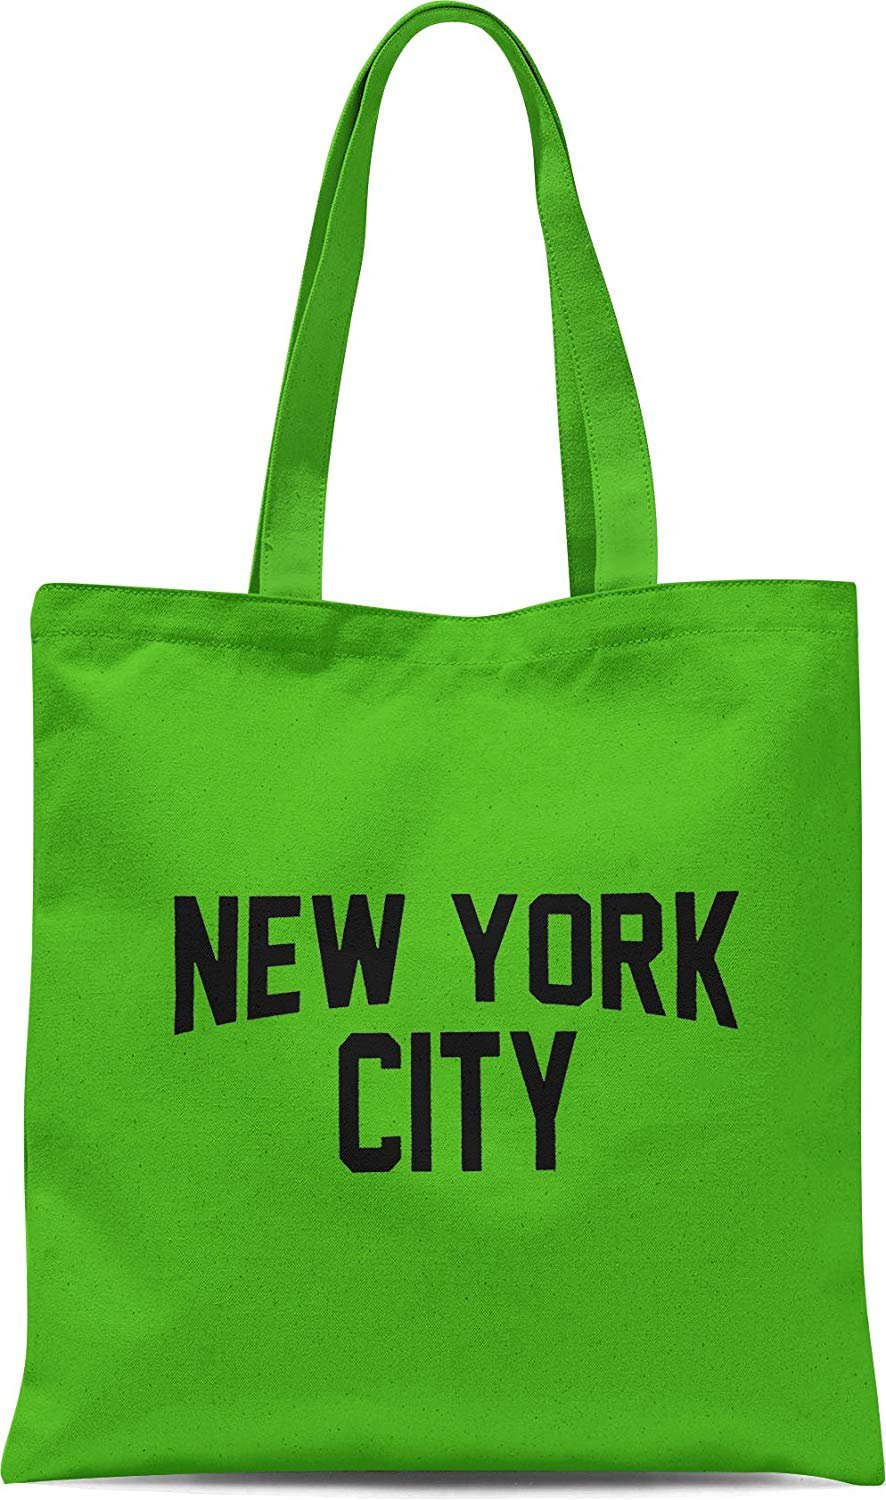 NYC Tote Bag New York City 100% Cotton Canvas Screenprinted (Kelly Green)